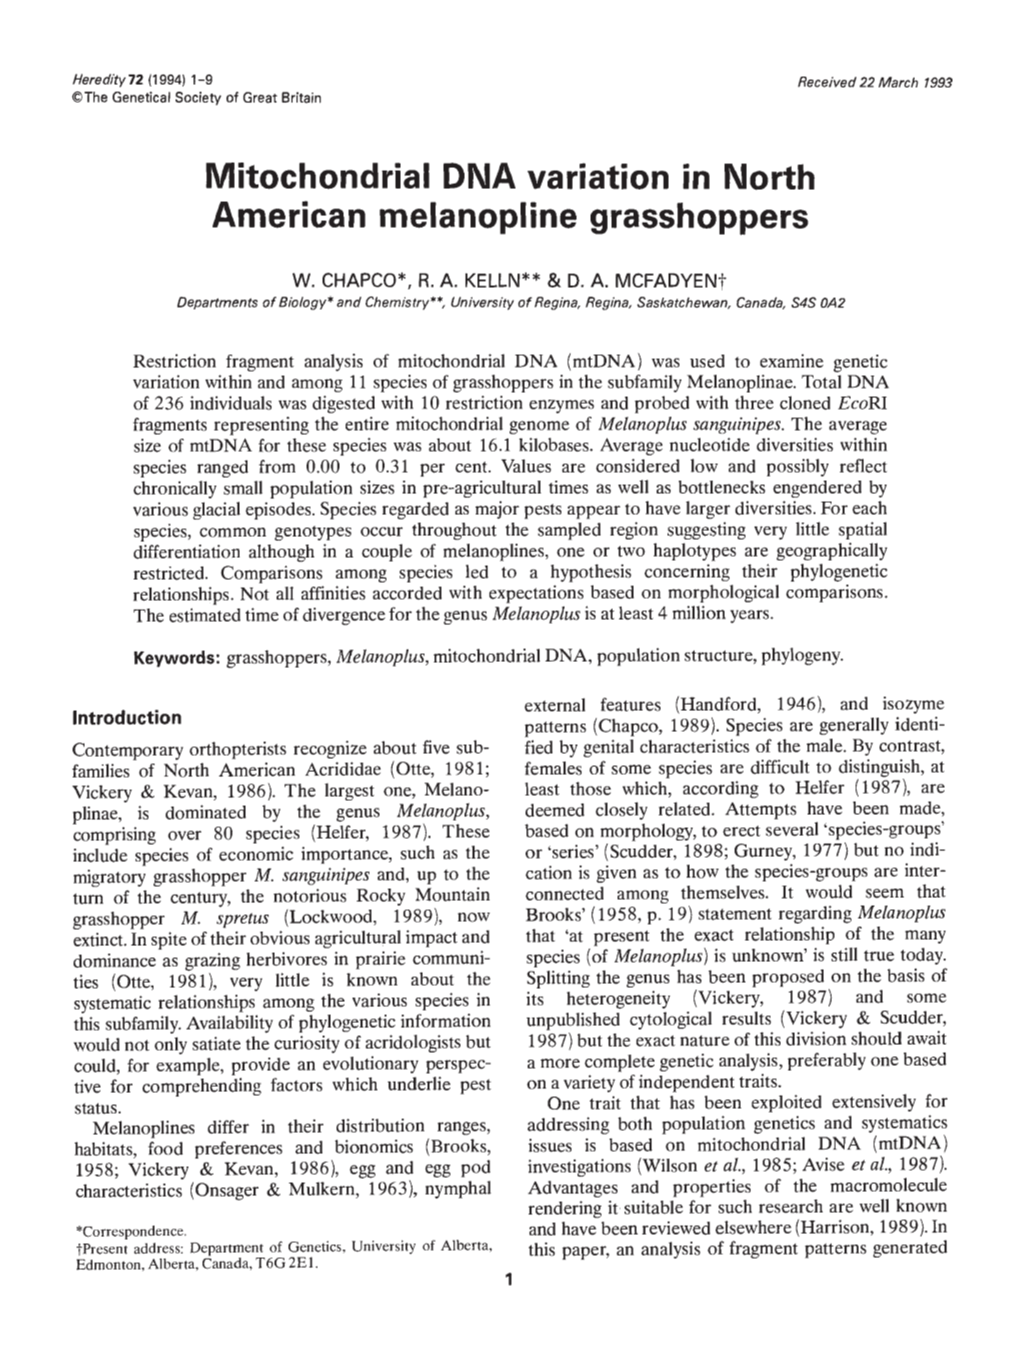 Mitochondrial DNA Variation in North American Melanopline Grasshoppers